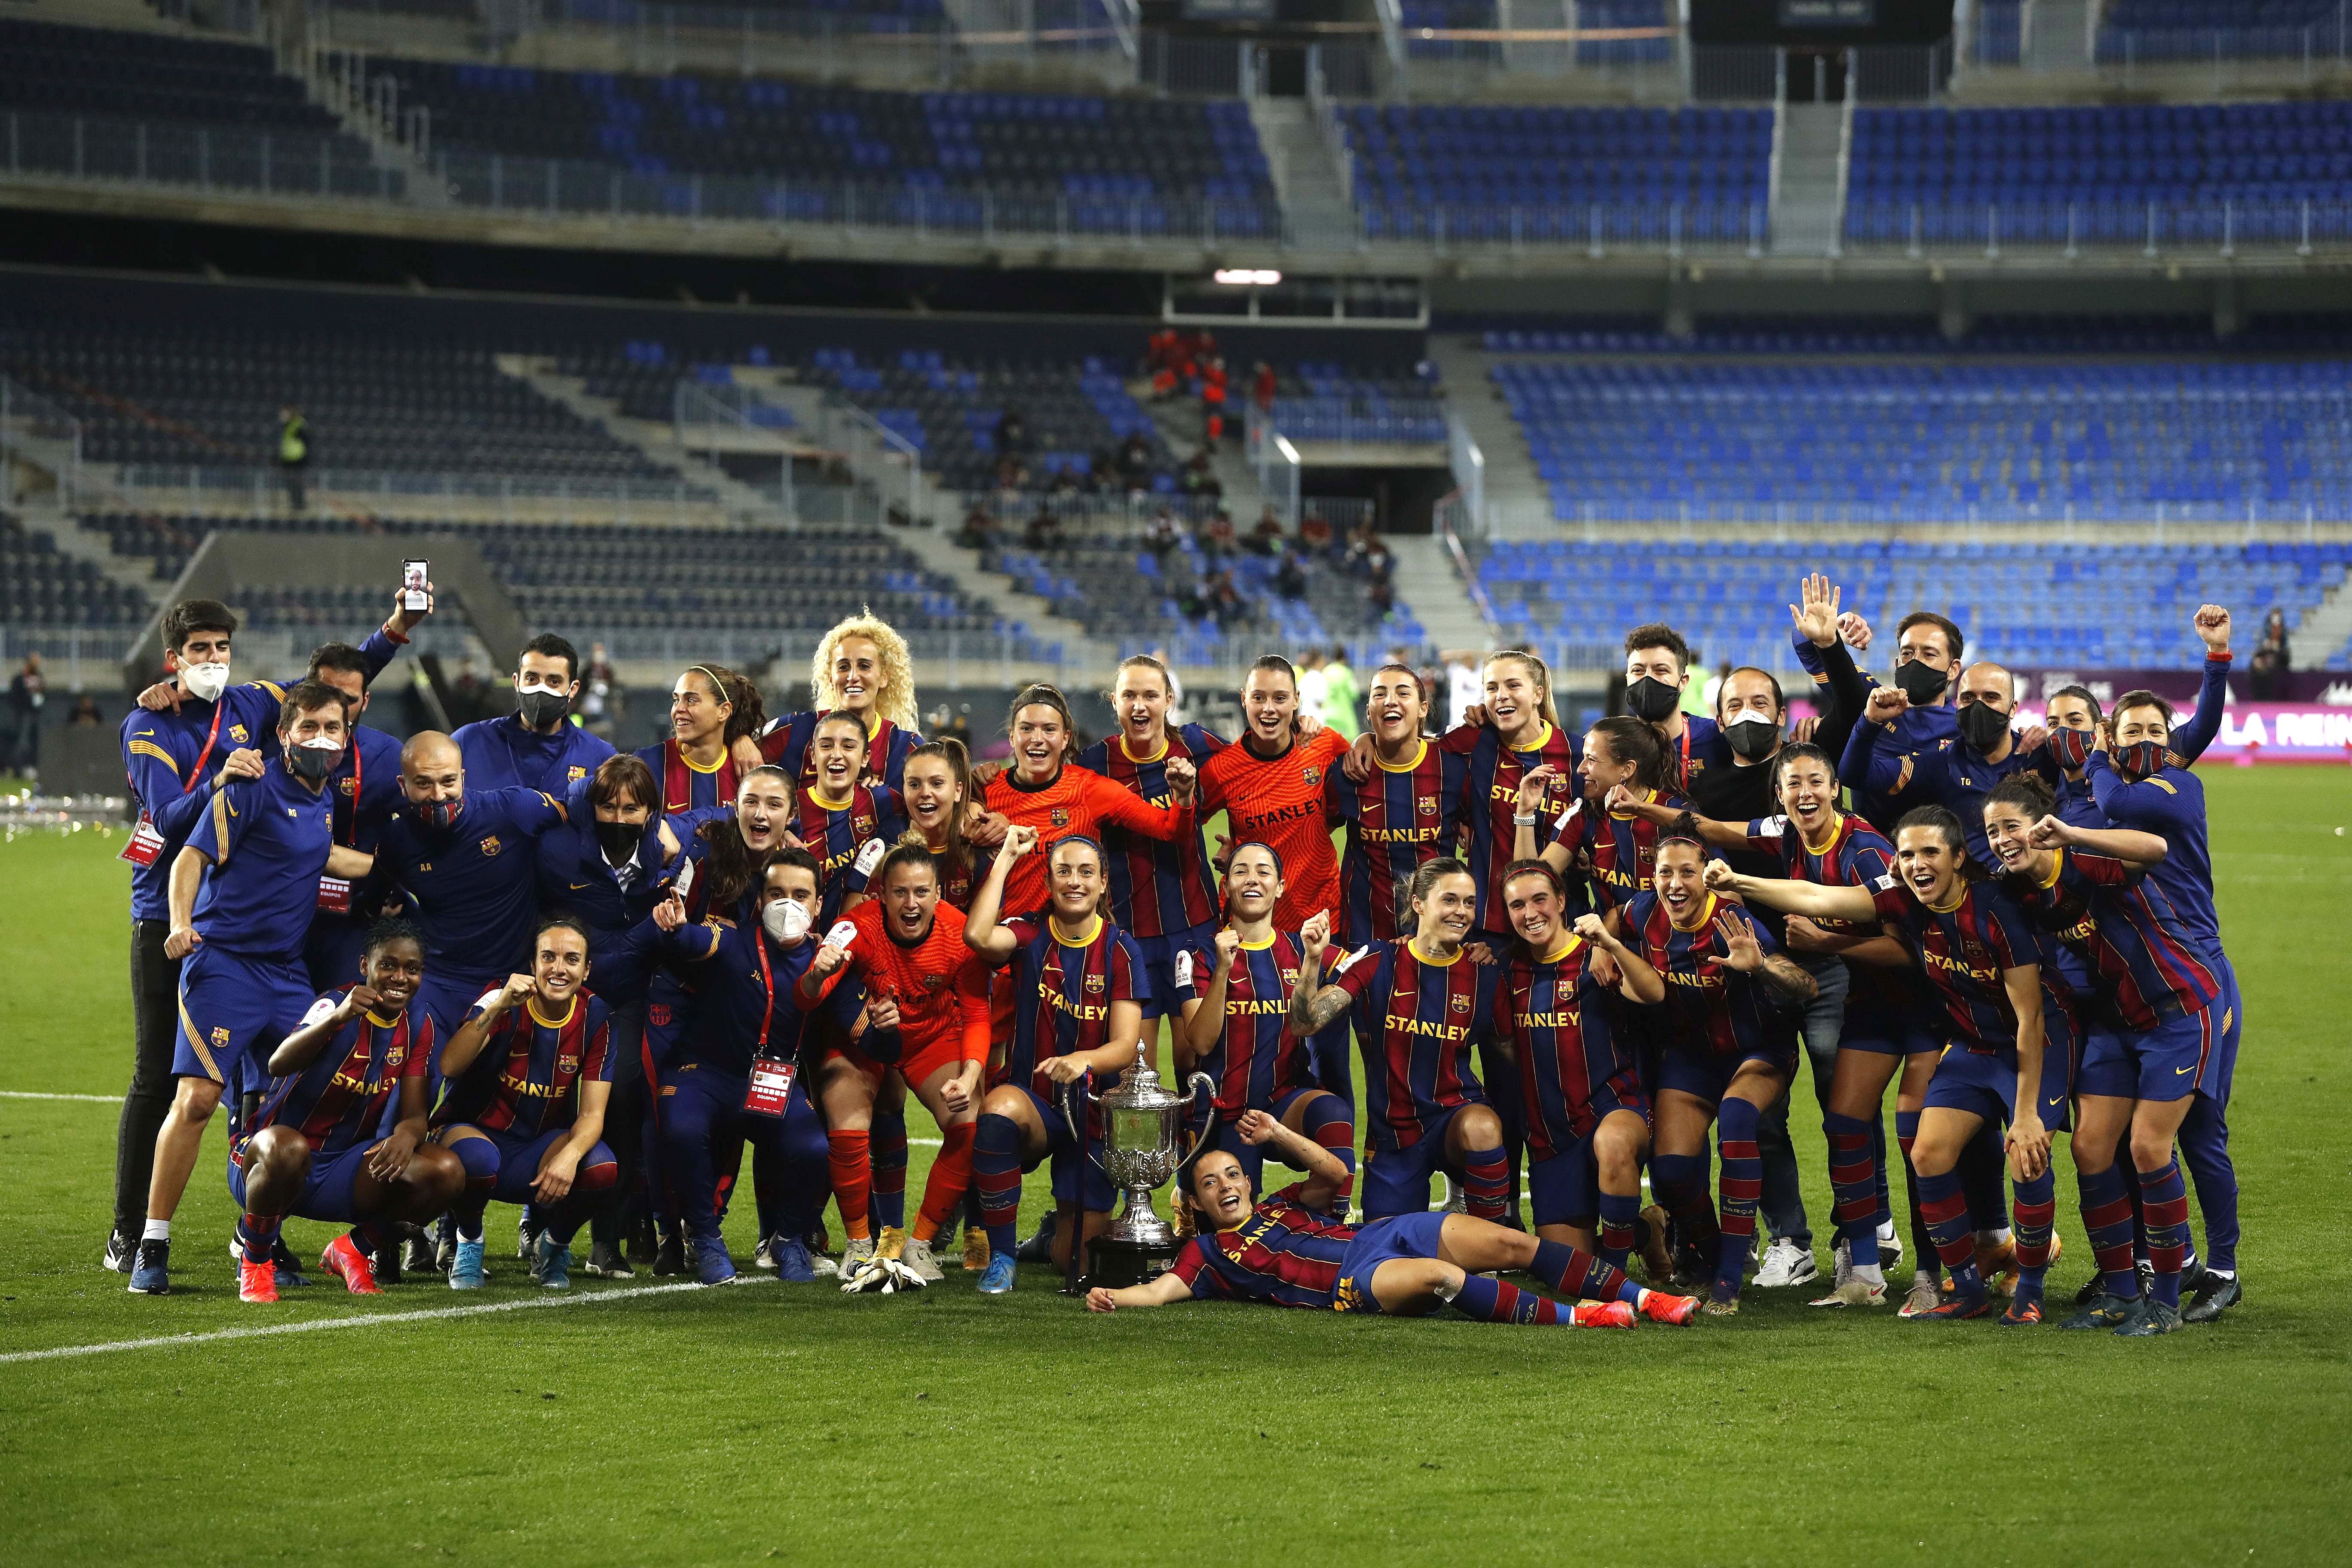 El Barça consigue la Copa de la Reina después de ganar al Logroño (3-0)